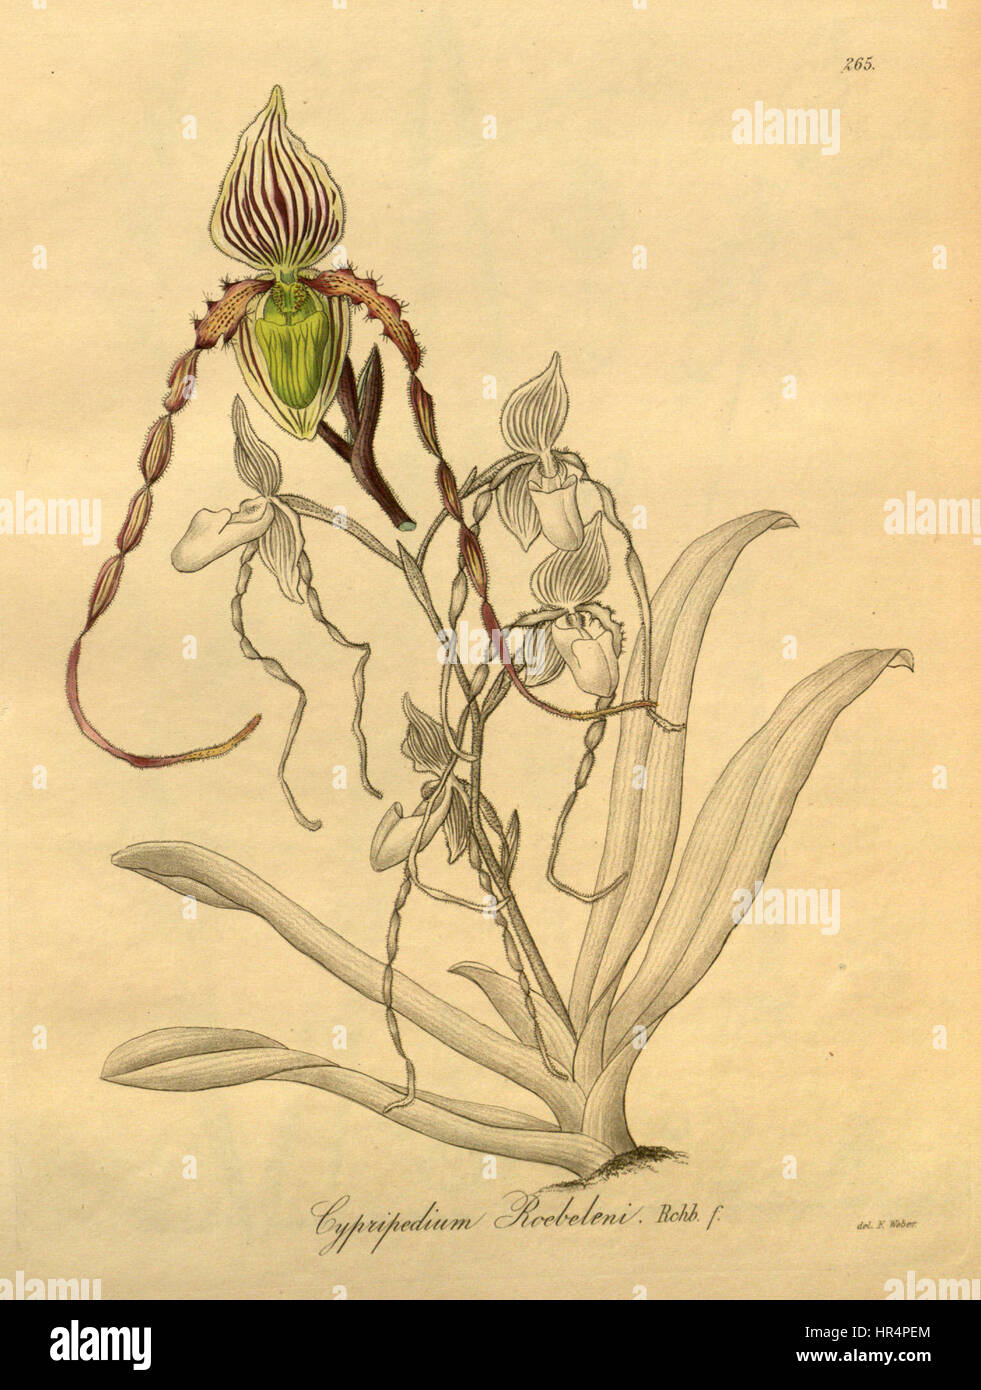 Paphiopedilum philippinense var. roebelenii (as Cypripedium roebelenii) - Xenia 3-265 (1893) Stock Photo